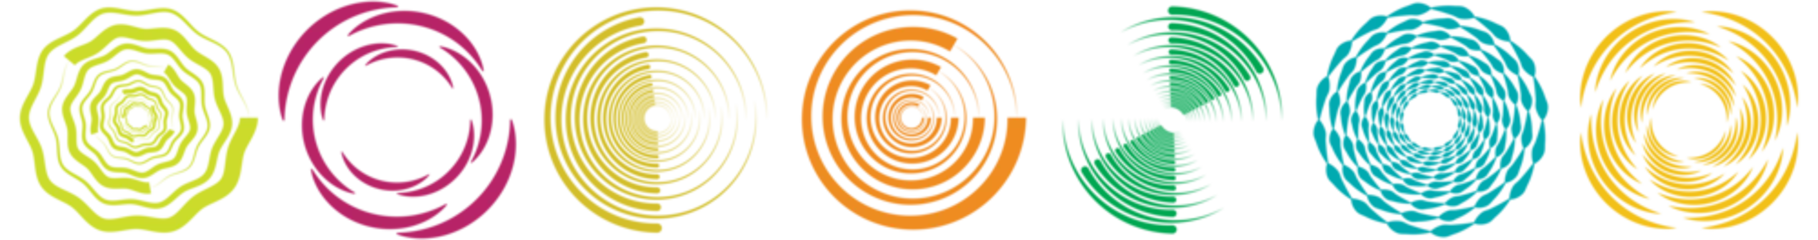 Küchenrückwand glas motiv Spiral, swirl, twirl, vortex icon, shape. Concentric circles, rings. Abstract geometric shapes with rotation effect © Pixxsa